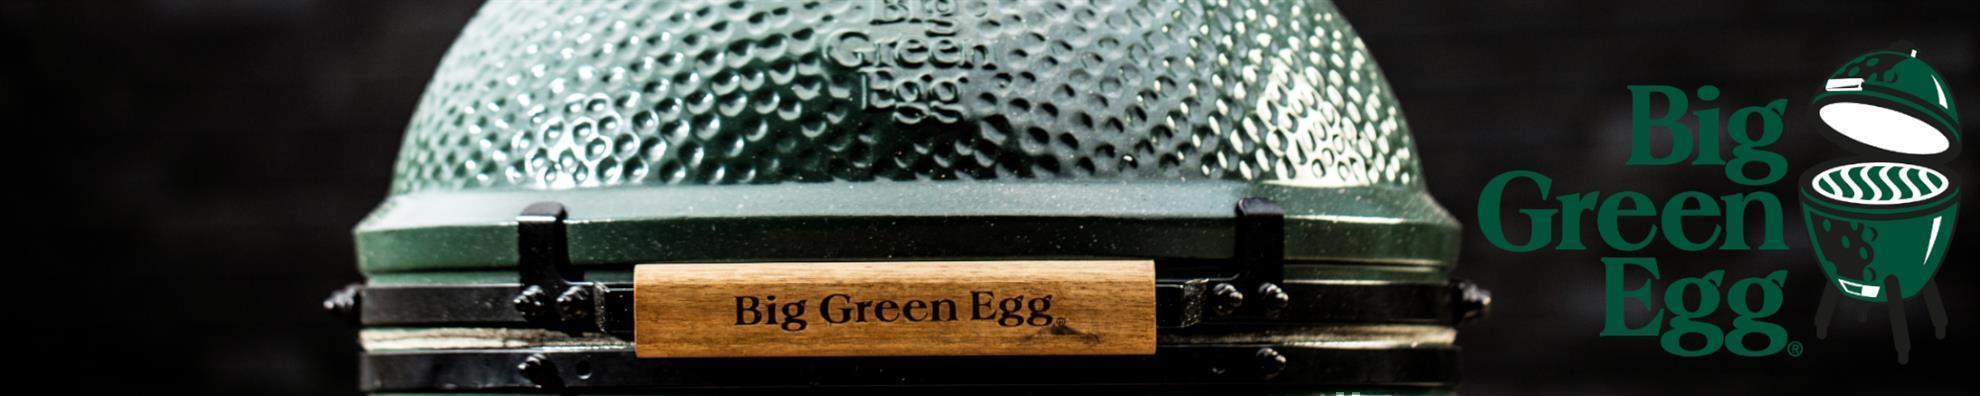 Big Green Egg - gelochtes, halbrundes Rost für XL